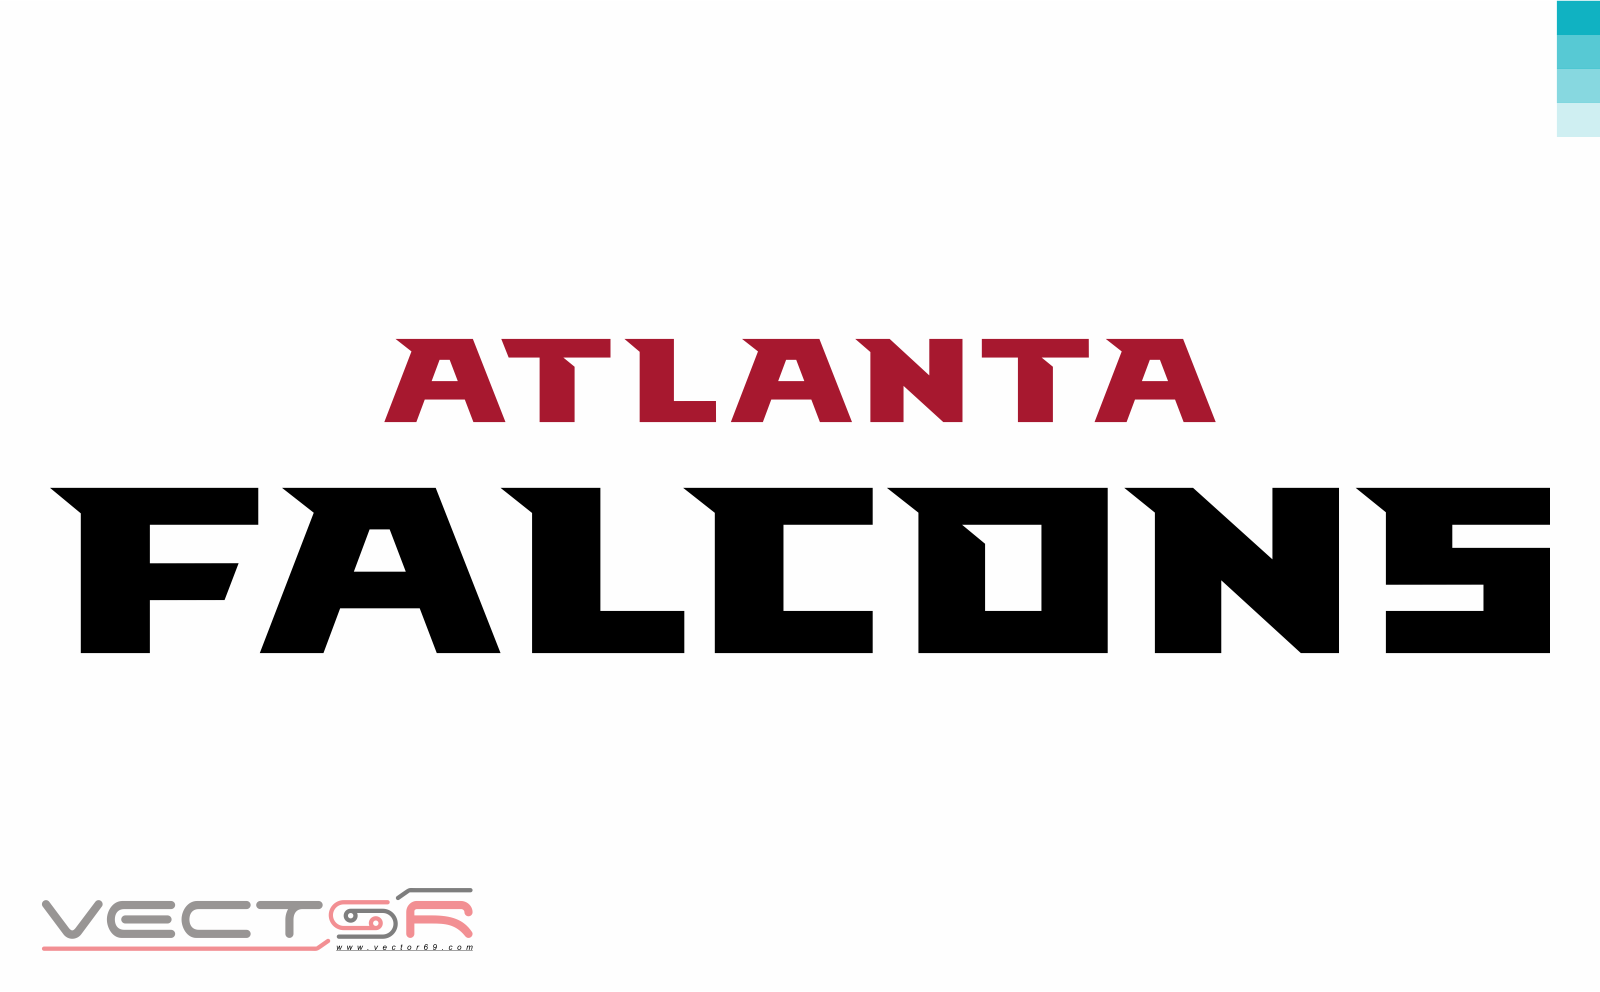 Atlanta Falcons Wordmark - Download Vector File SVG (Scalable Vector Graphics)